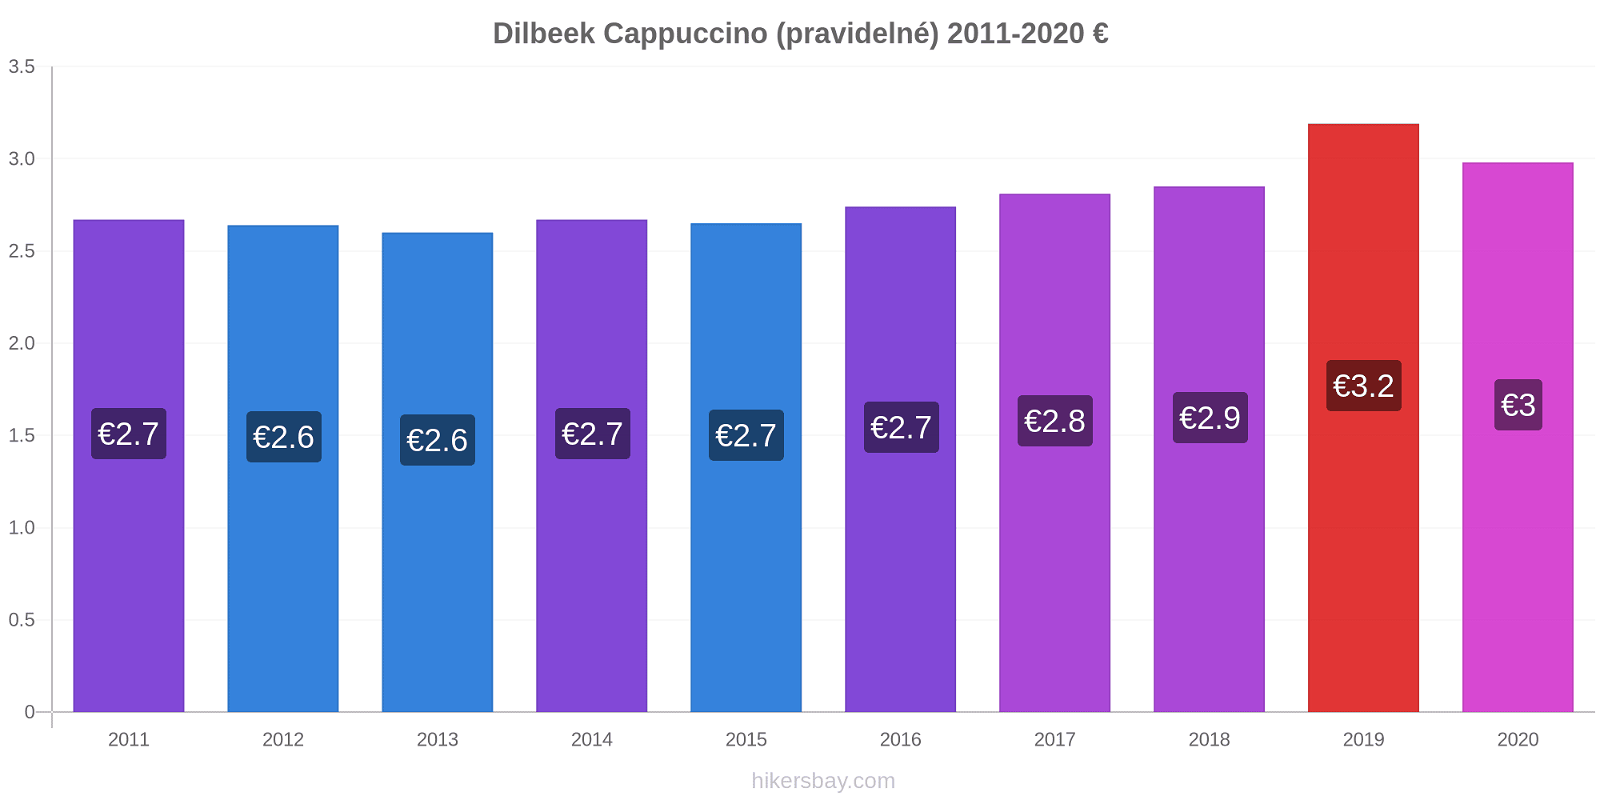 Dilbeek změny cen Cappuccino (pravidelné) hikersbay.com